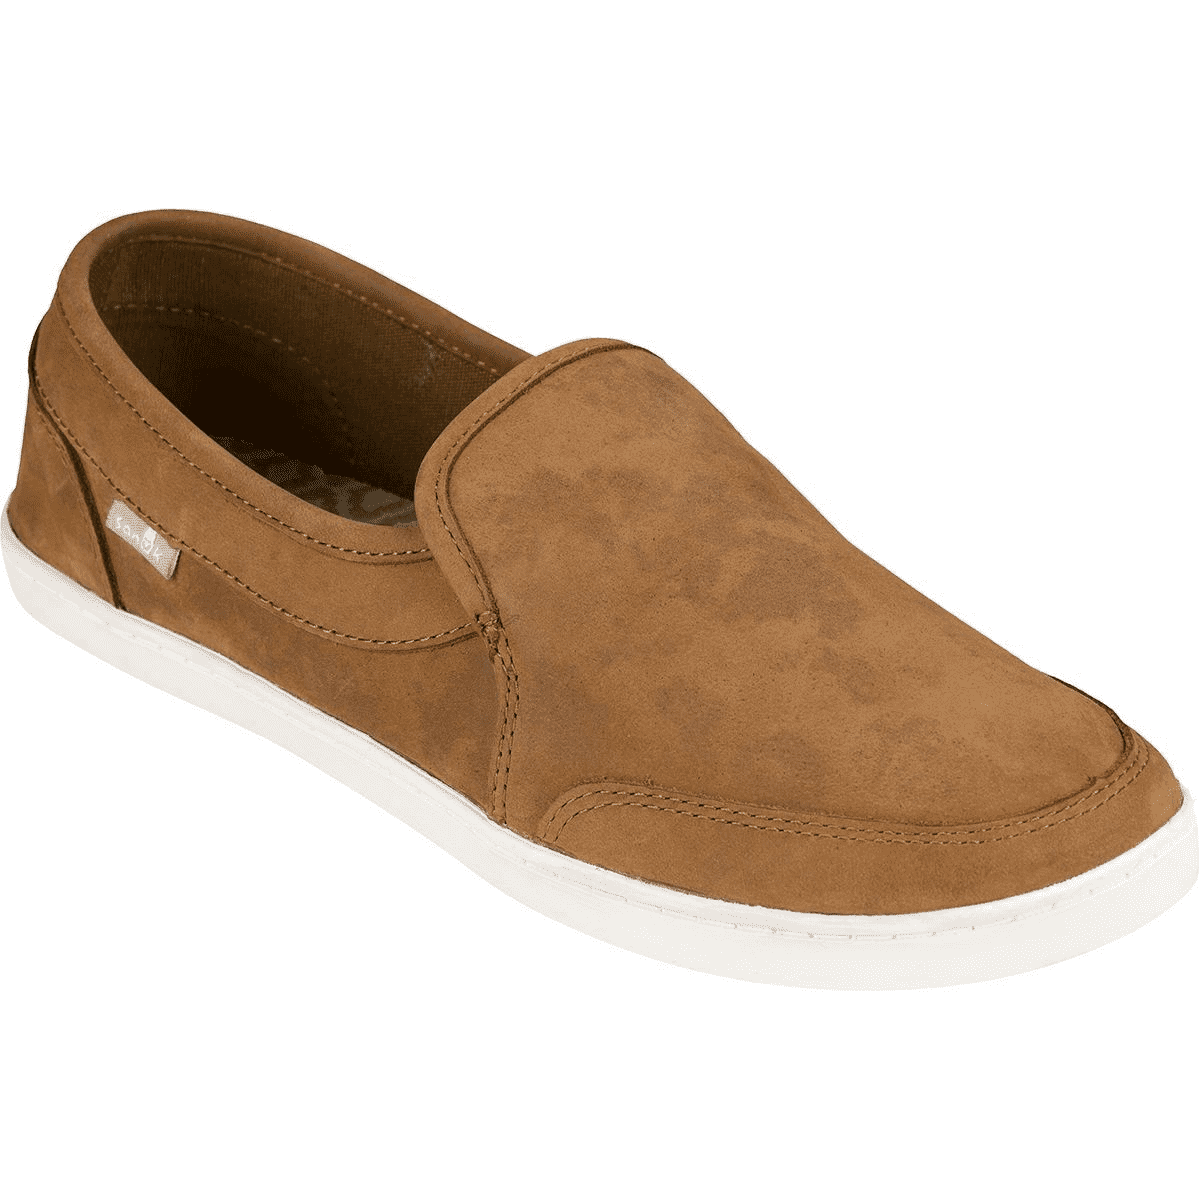 Sanuk Women's Pair O Dice Leather Shoe